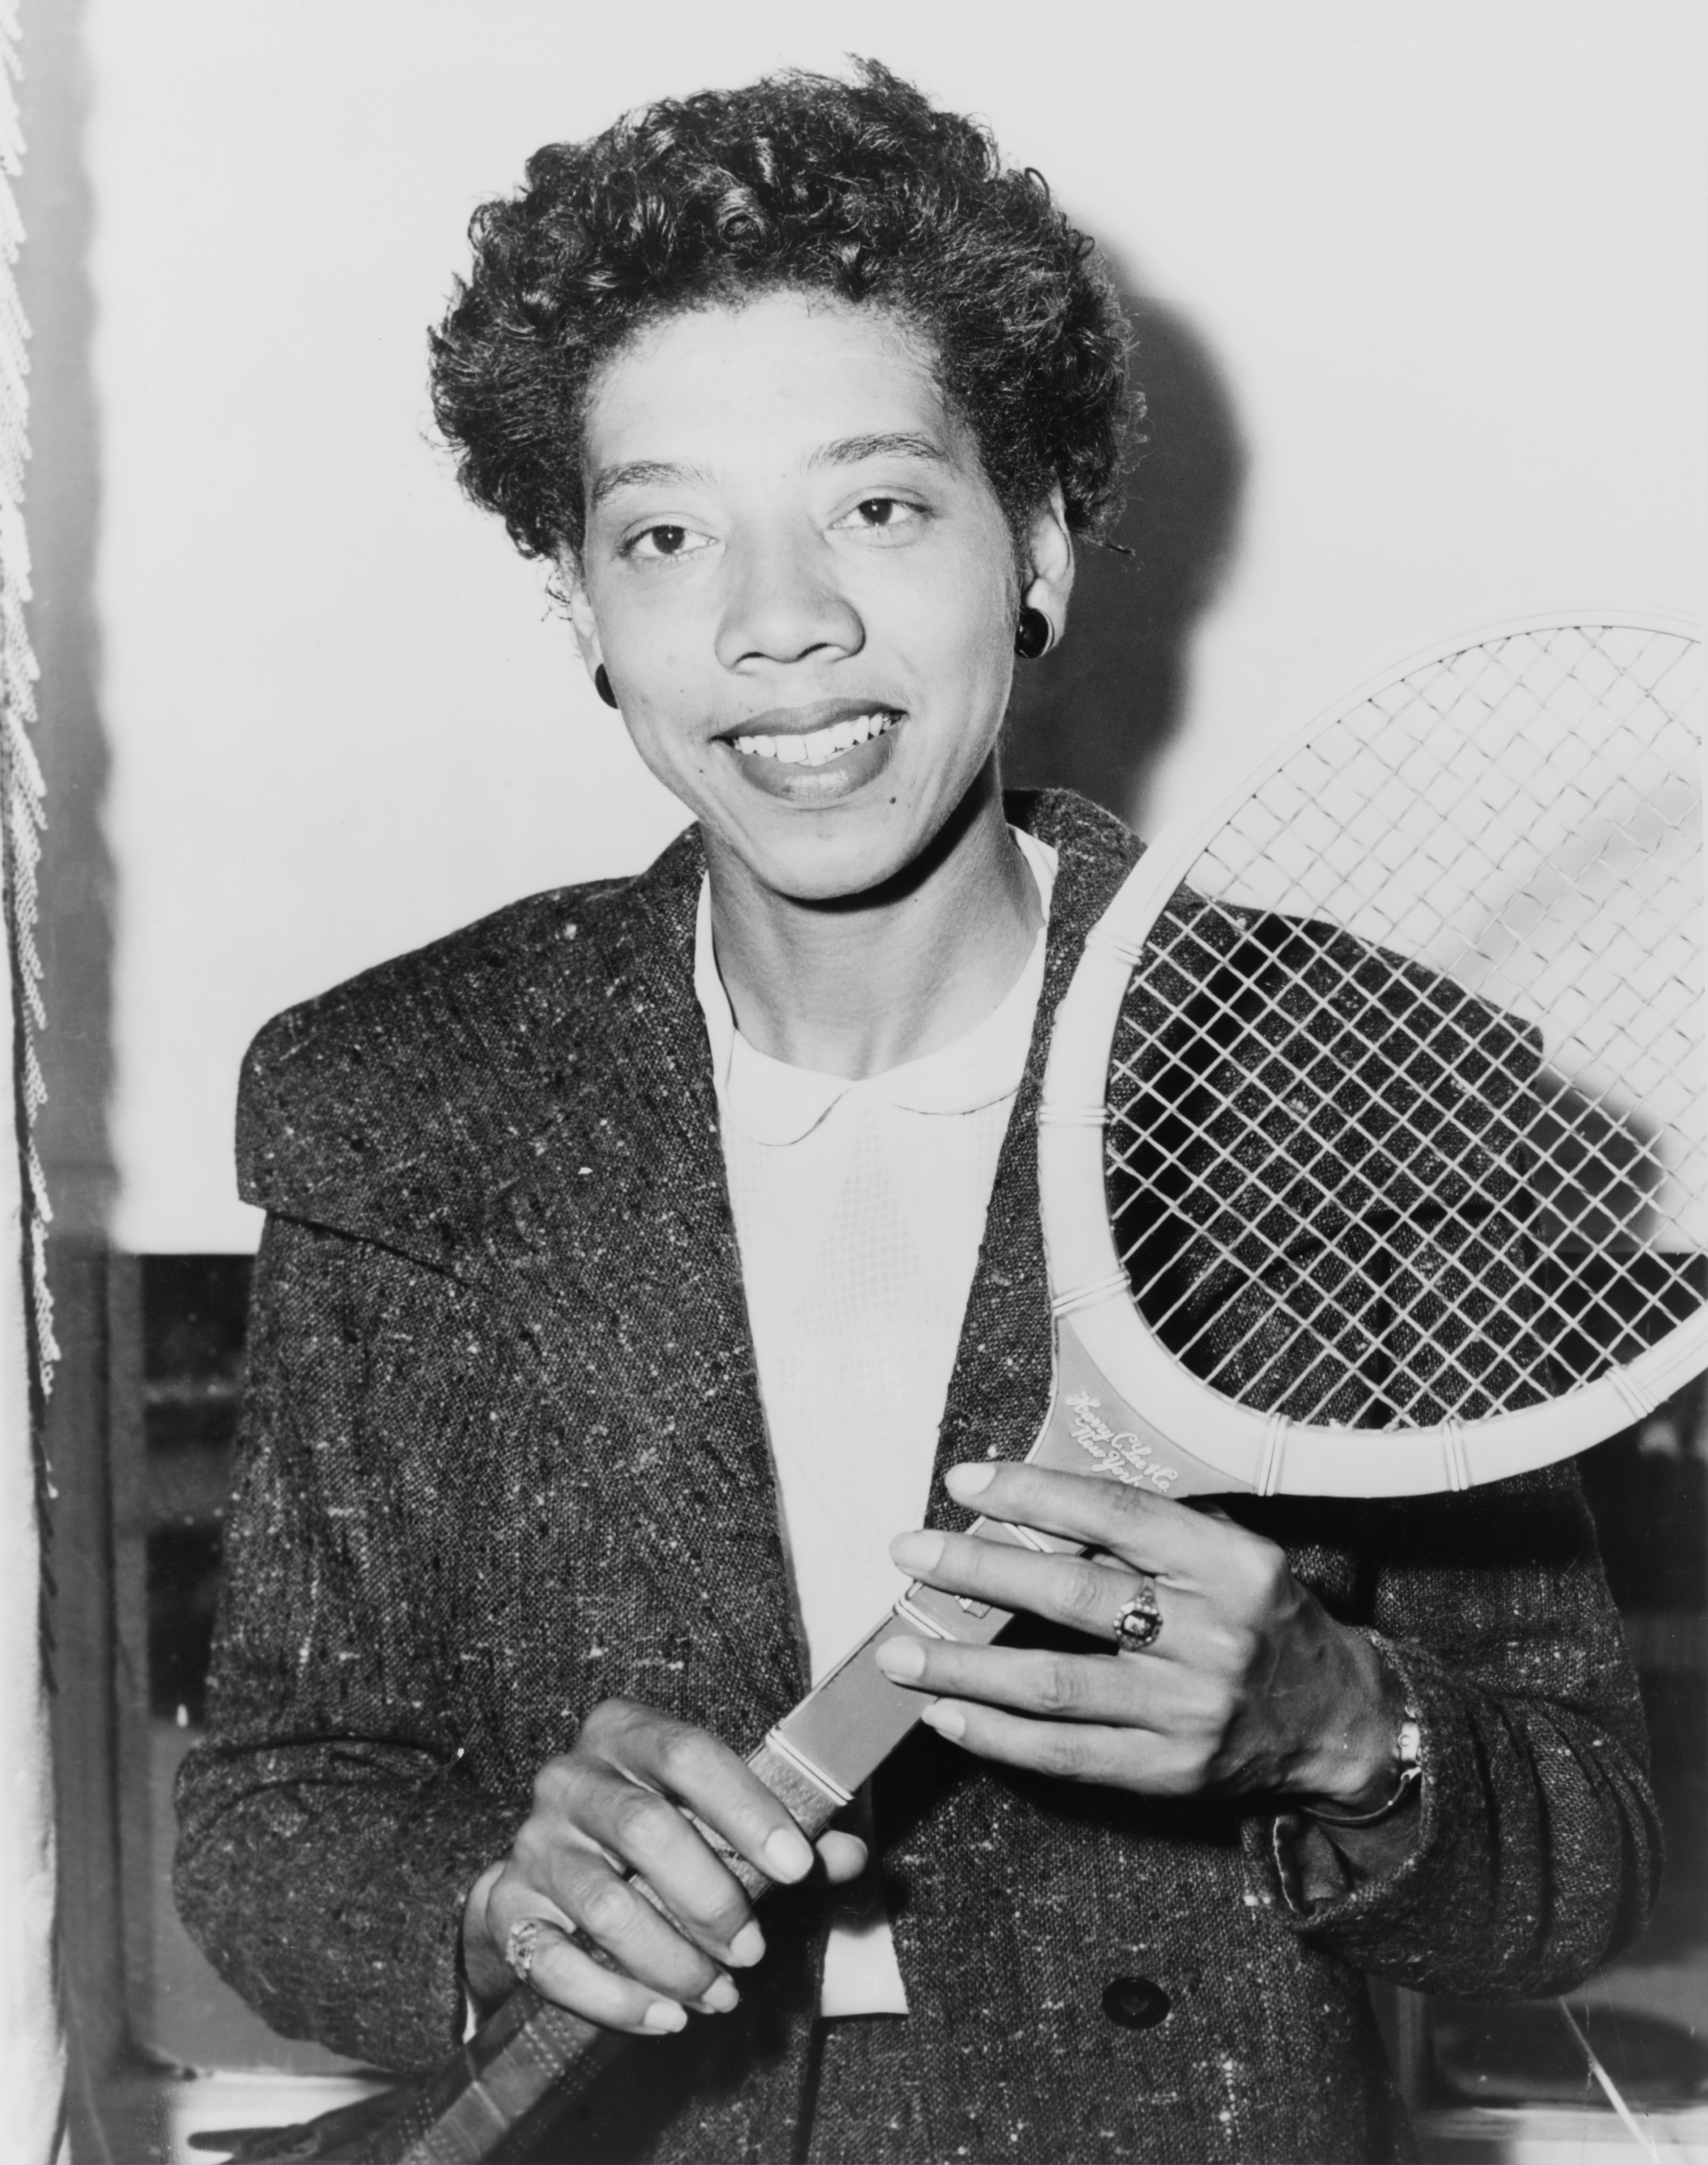 photo of a Black women tennis athlete holding a racket.